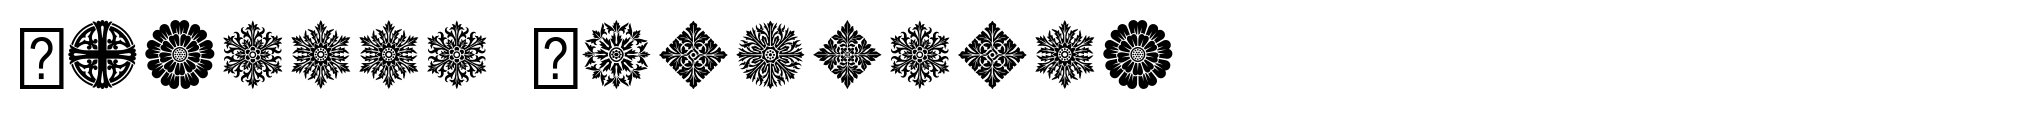 Rosette Ornaments image